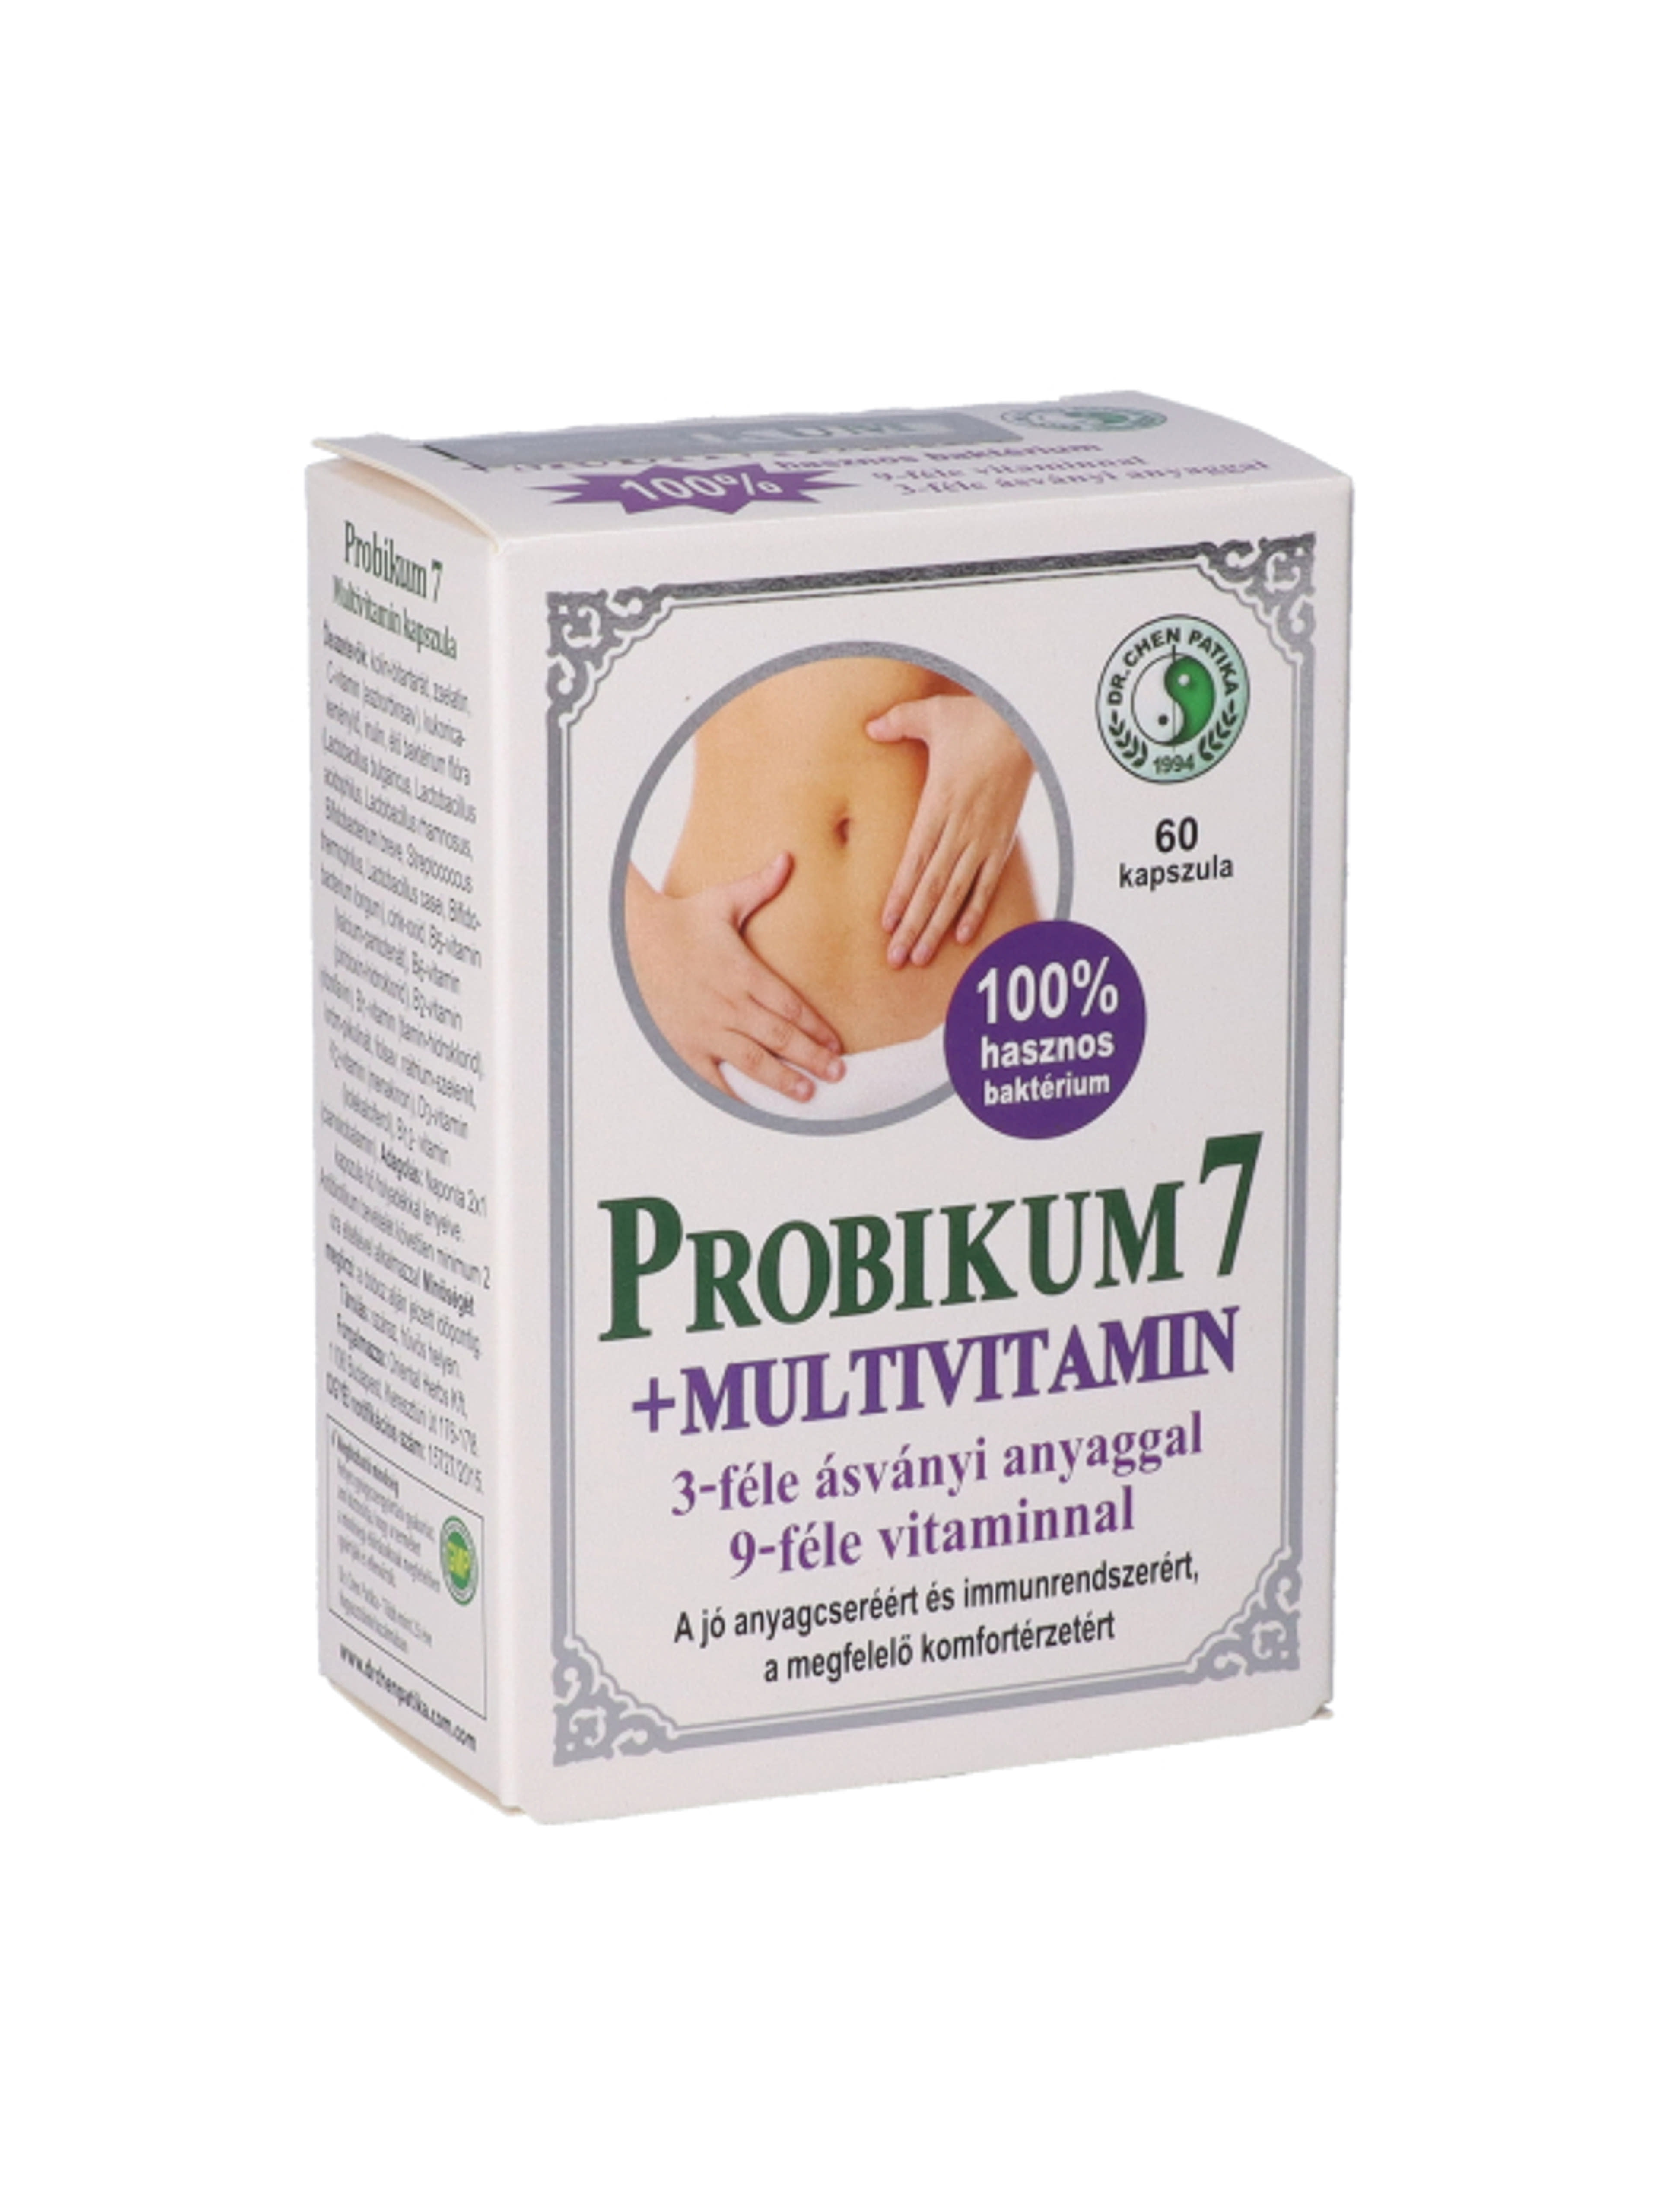 Dr.Chen Patika probiotikum 7 multivitamin kapszula - 60 db